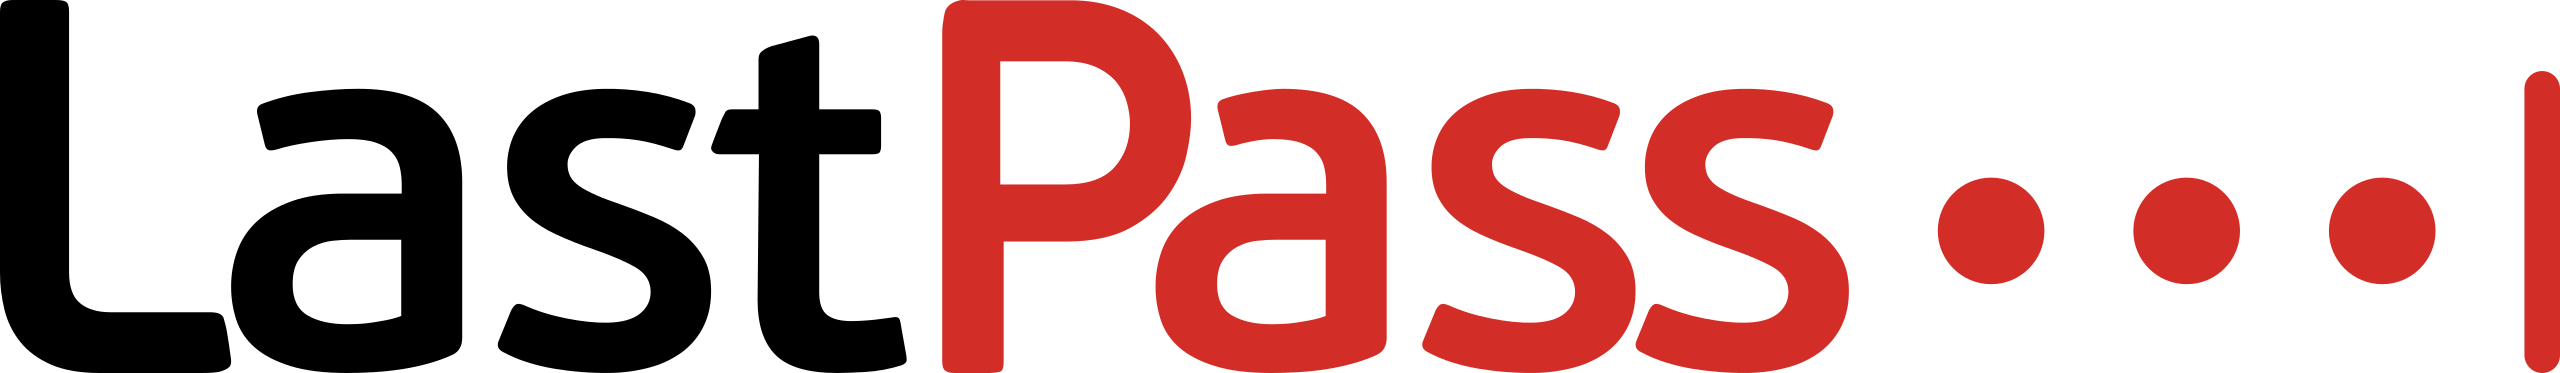 The LastPass official logo